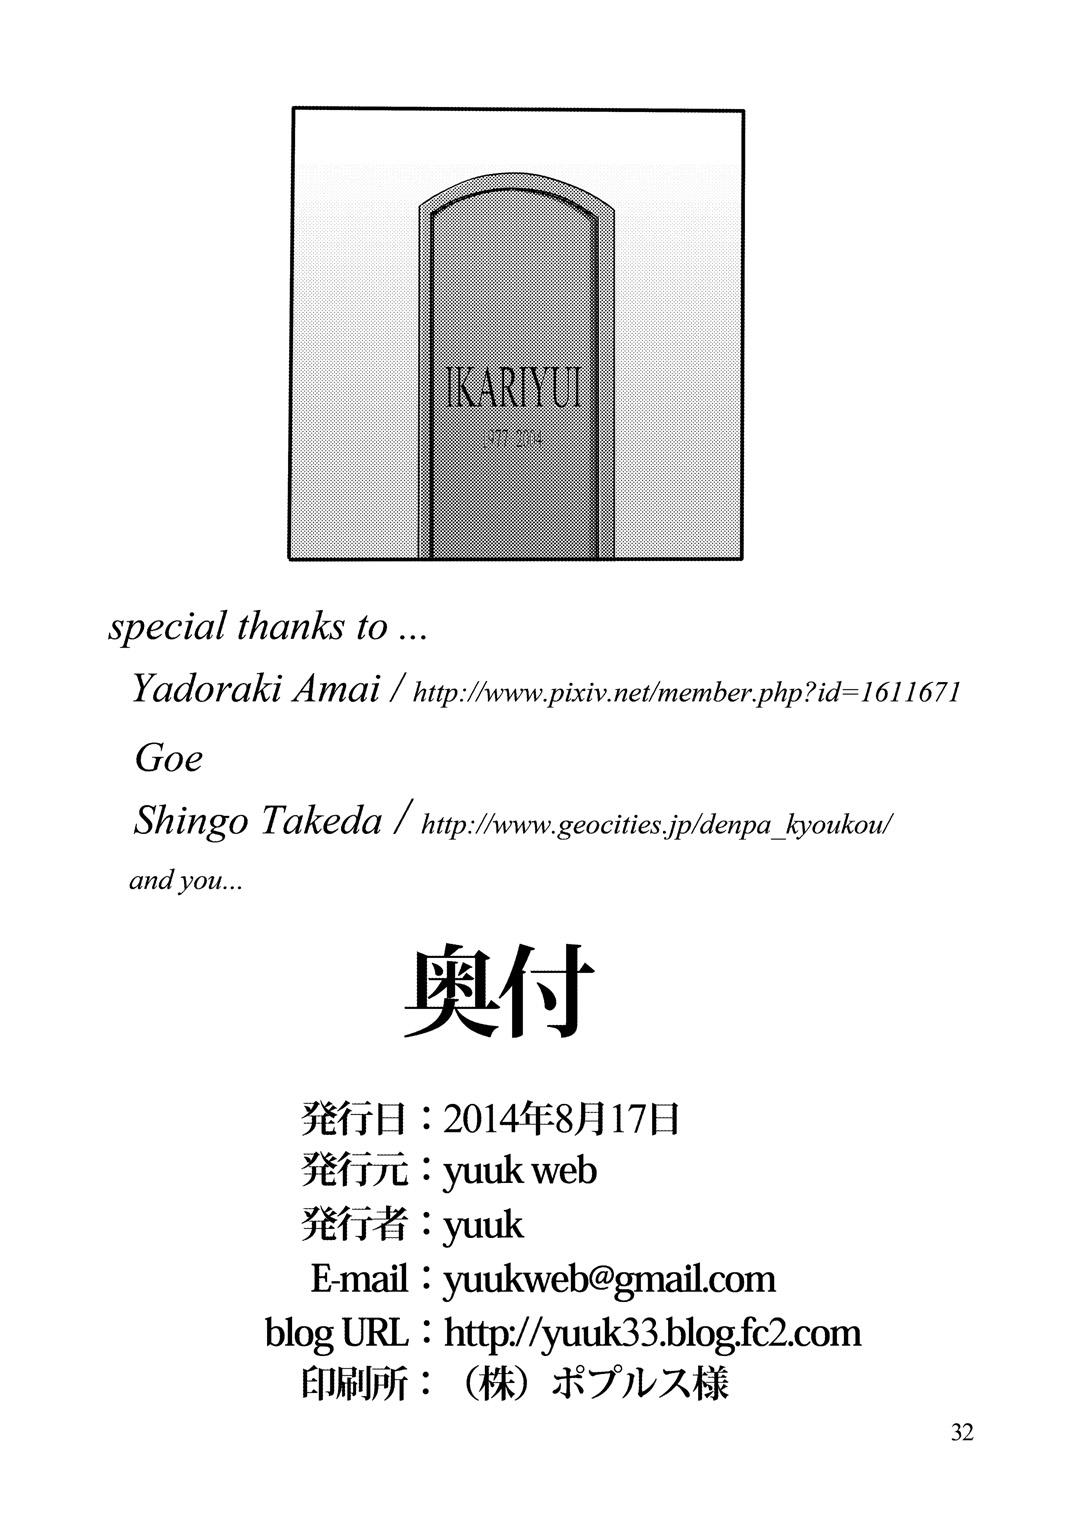 Yui Ikari 10th Anniversary Book - beyond the time 32